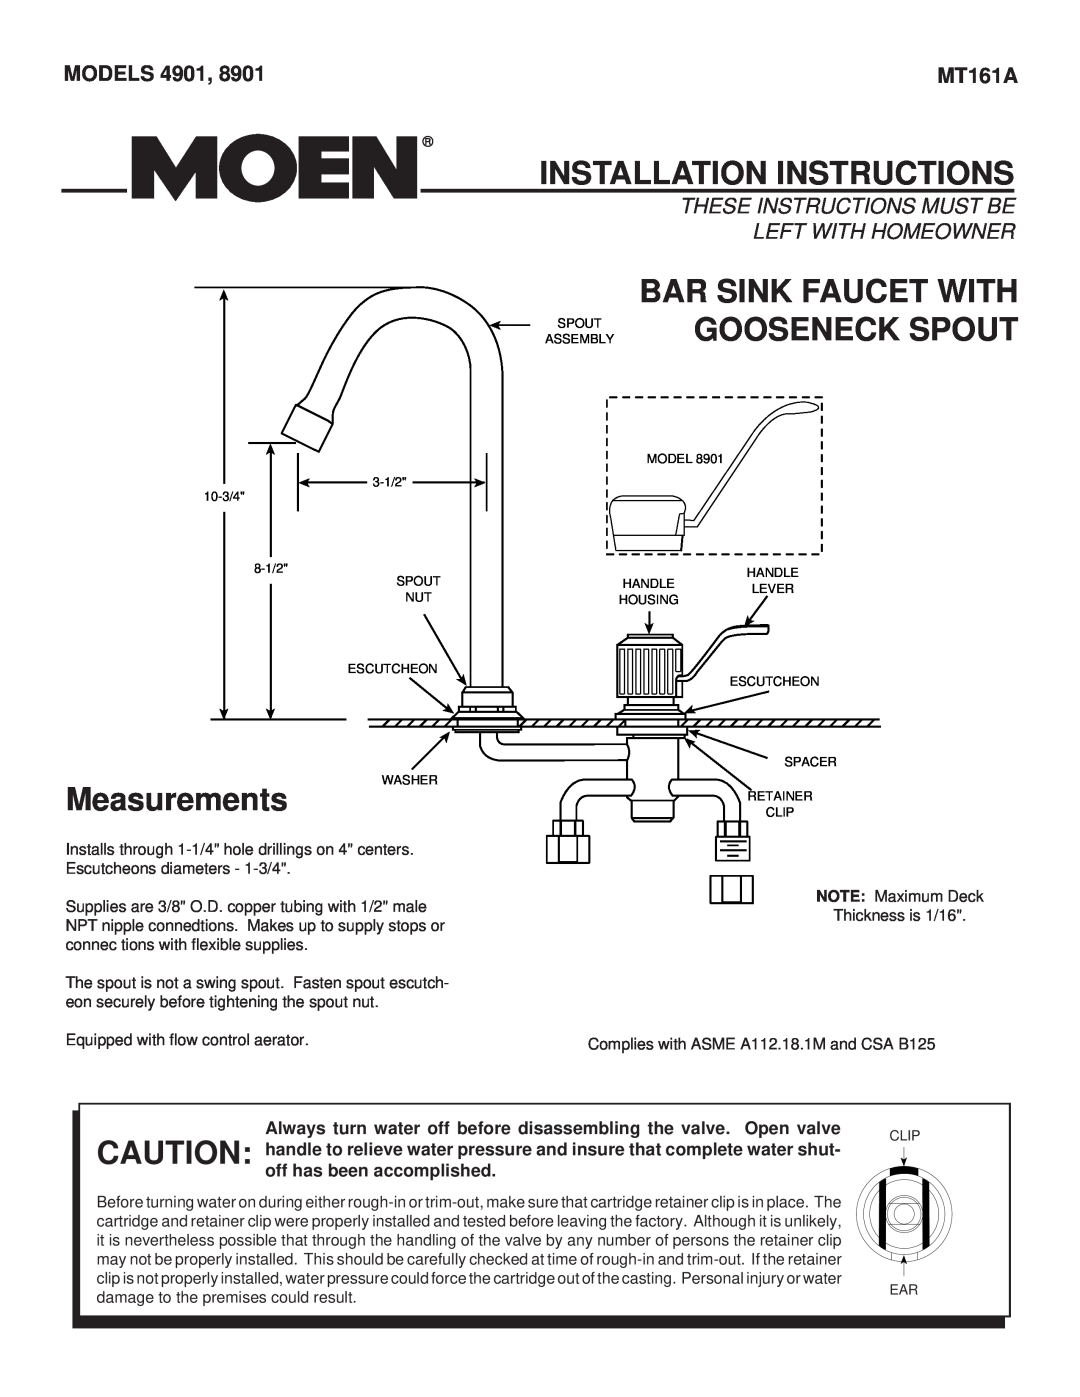 Moen 8901 installation instructions Installation Instructions, Gooseneck Spout, Measurements, MODELS 4901, MT161A 